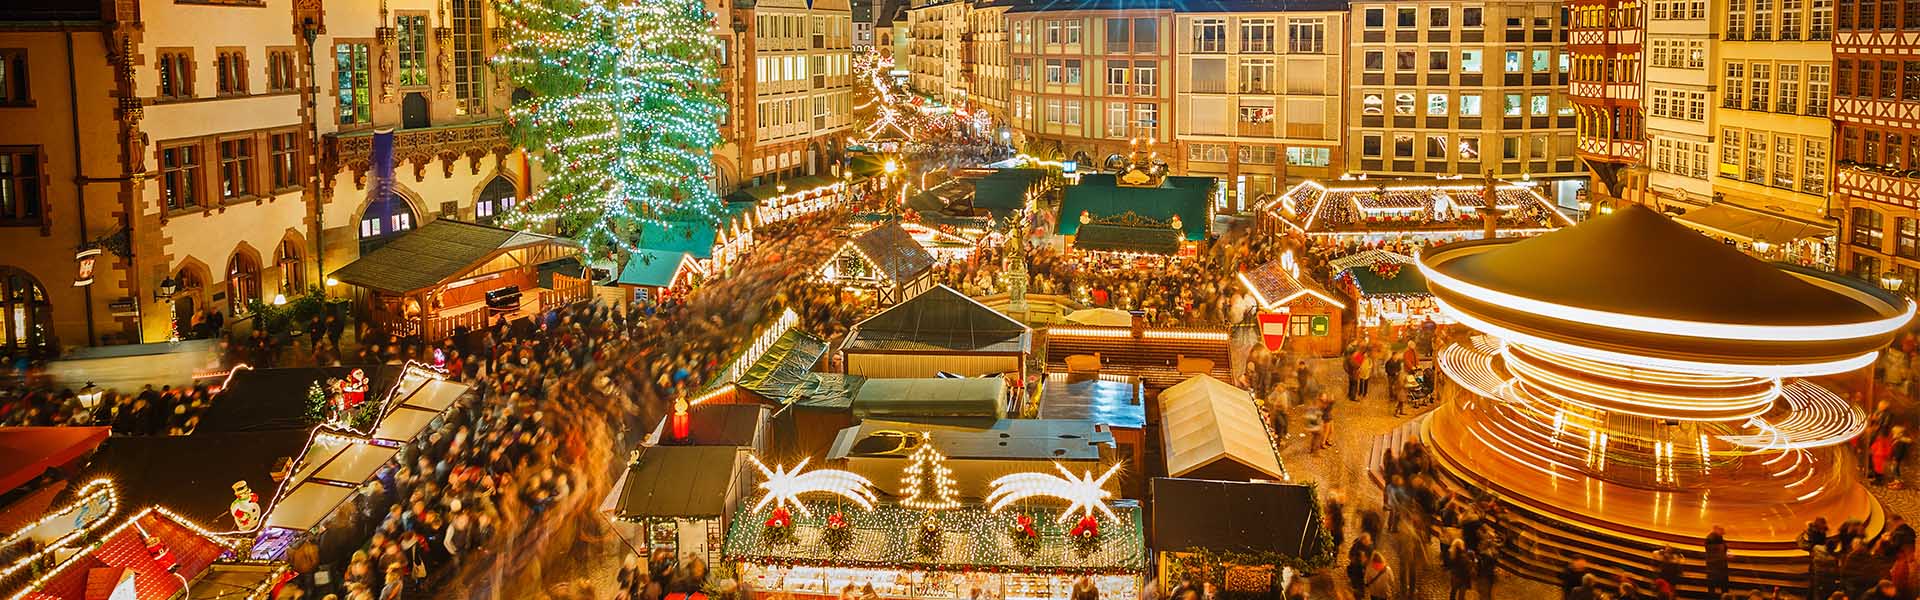 Top 5 Christmas Markets